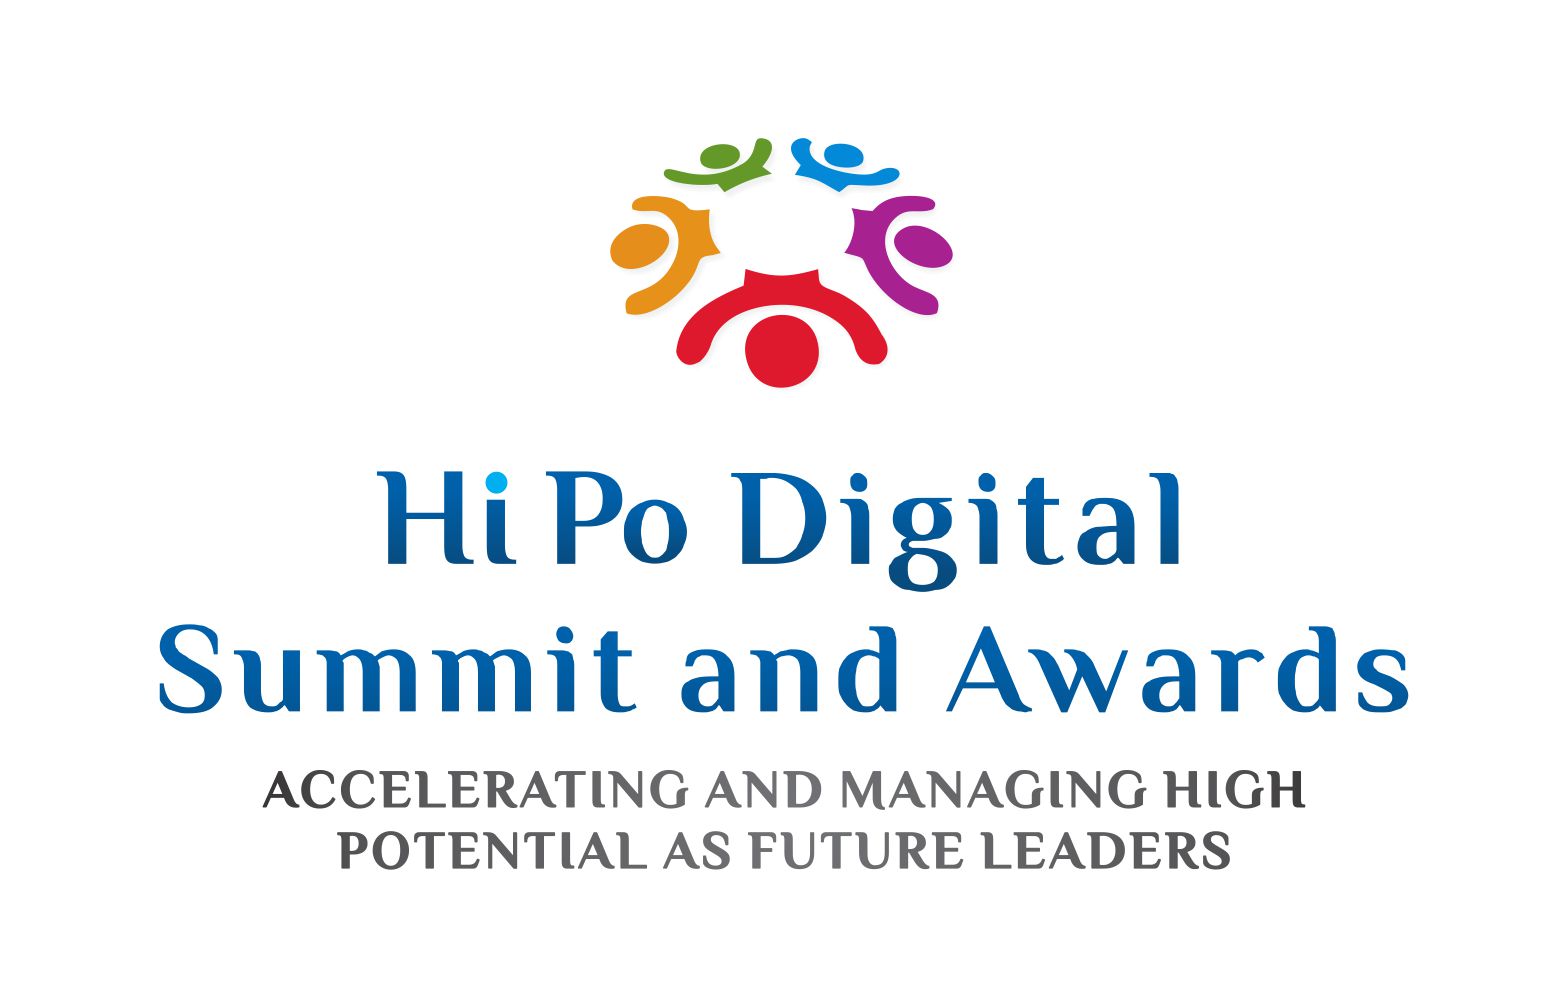 HiPo Digital Summit